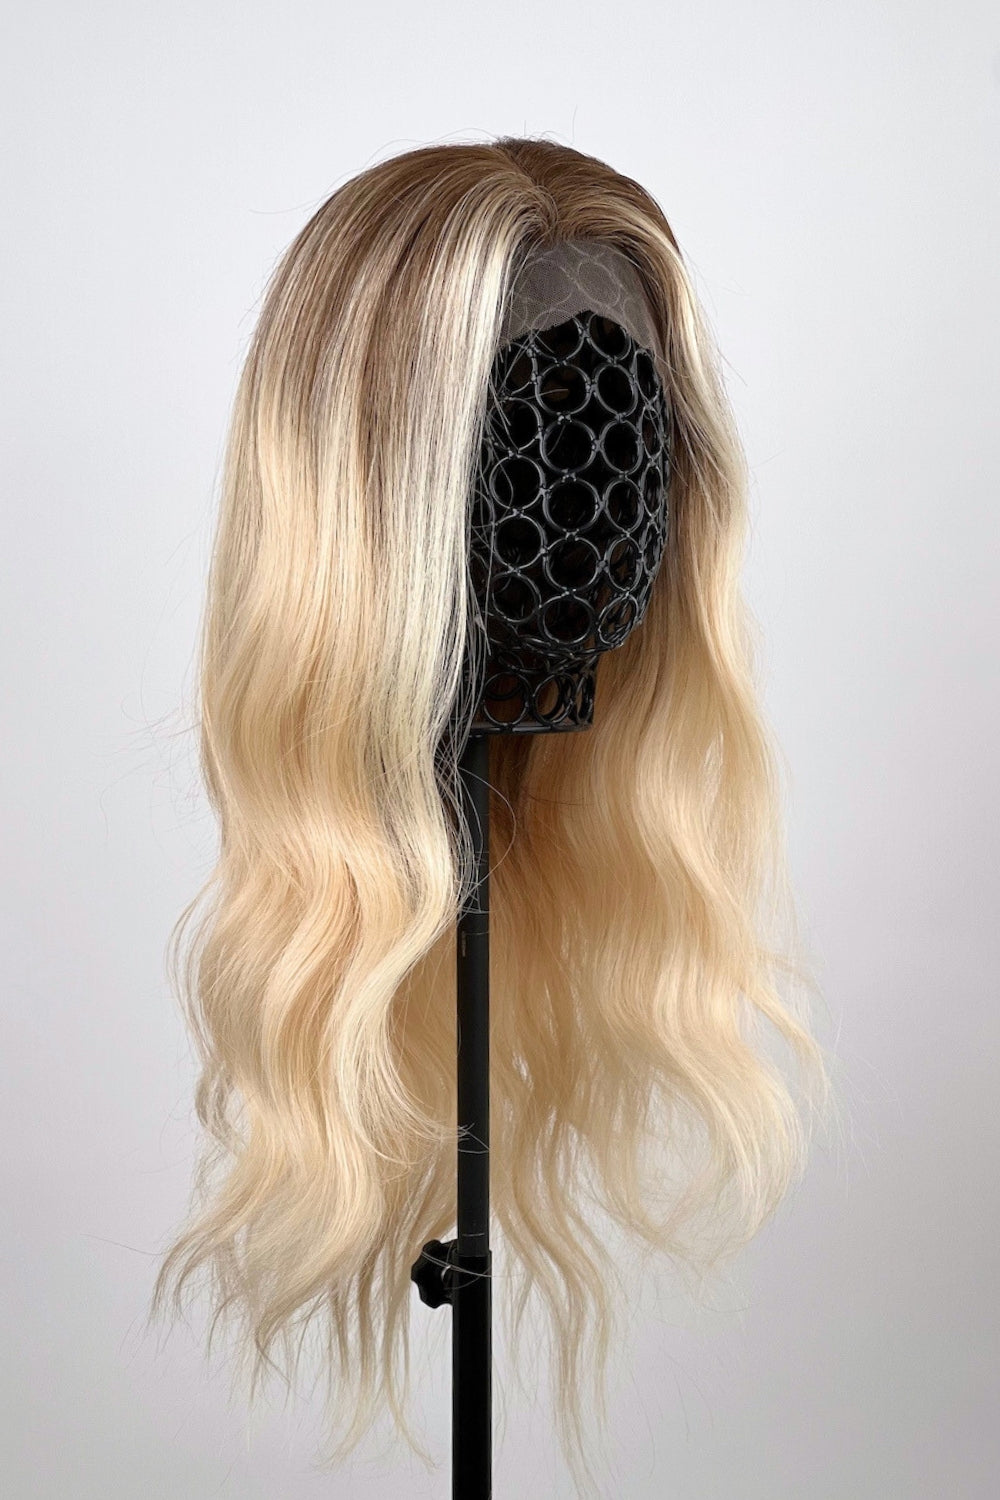 BHBD Vigorous wig: 40cm, äkta blond balayage peruk. Full lace, justerbar storlek. 100% Remy hår, handknutet. Naturligt utseende.